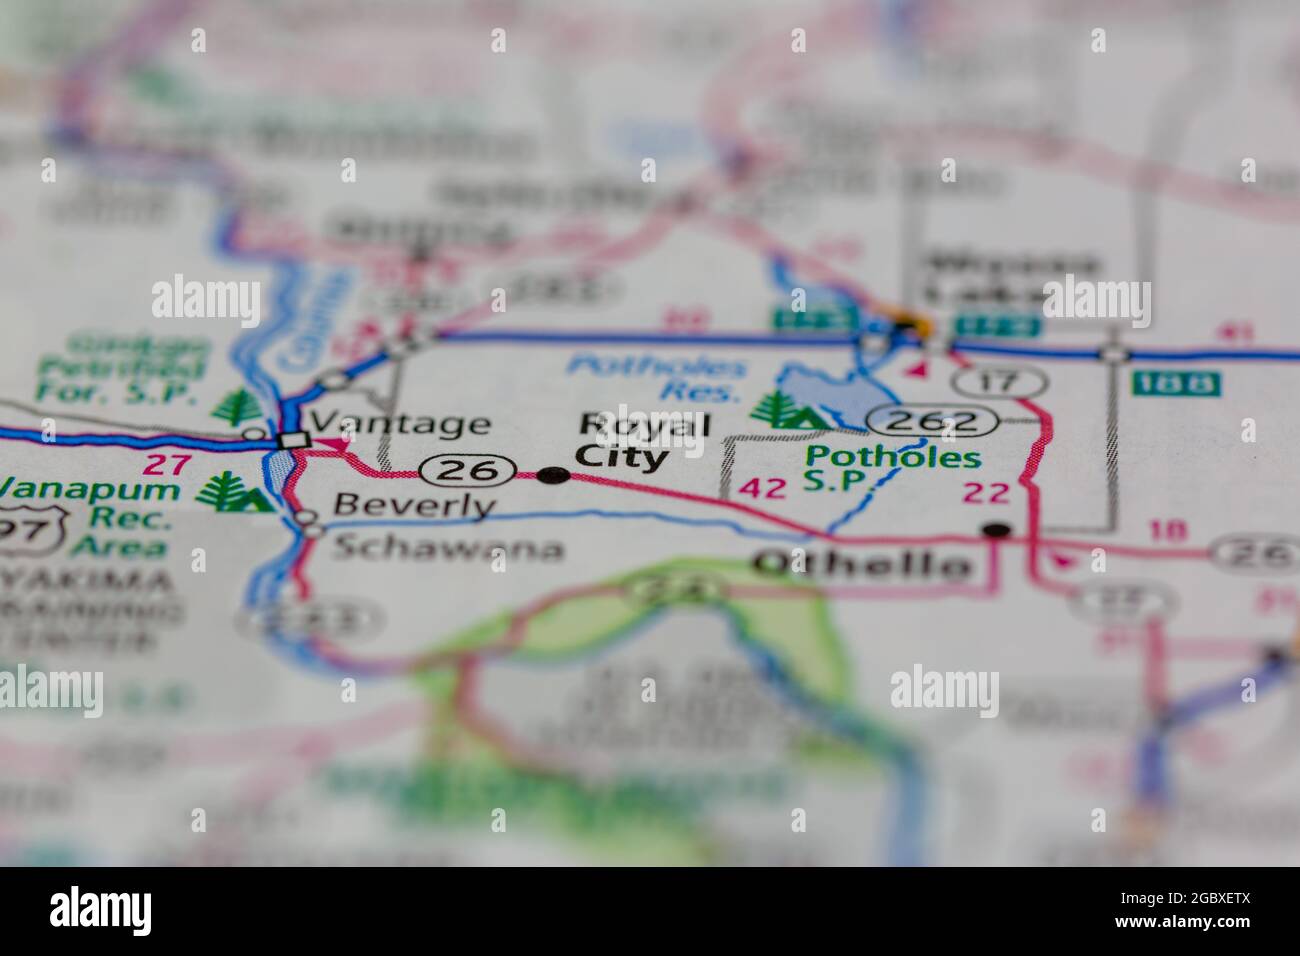 Royal City Washington State USA aparece en un mapa de carreteras o en un mapa geográfico Foto de stock